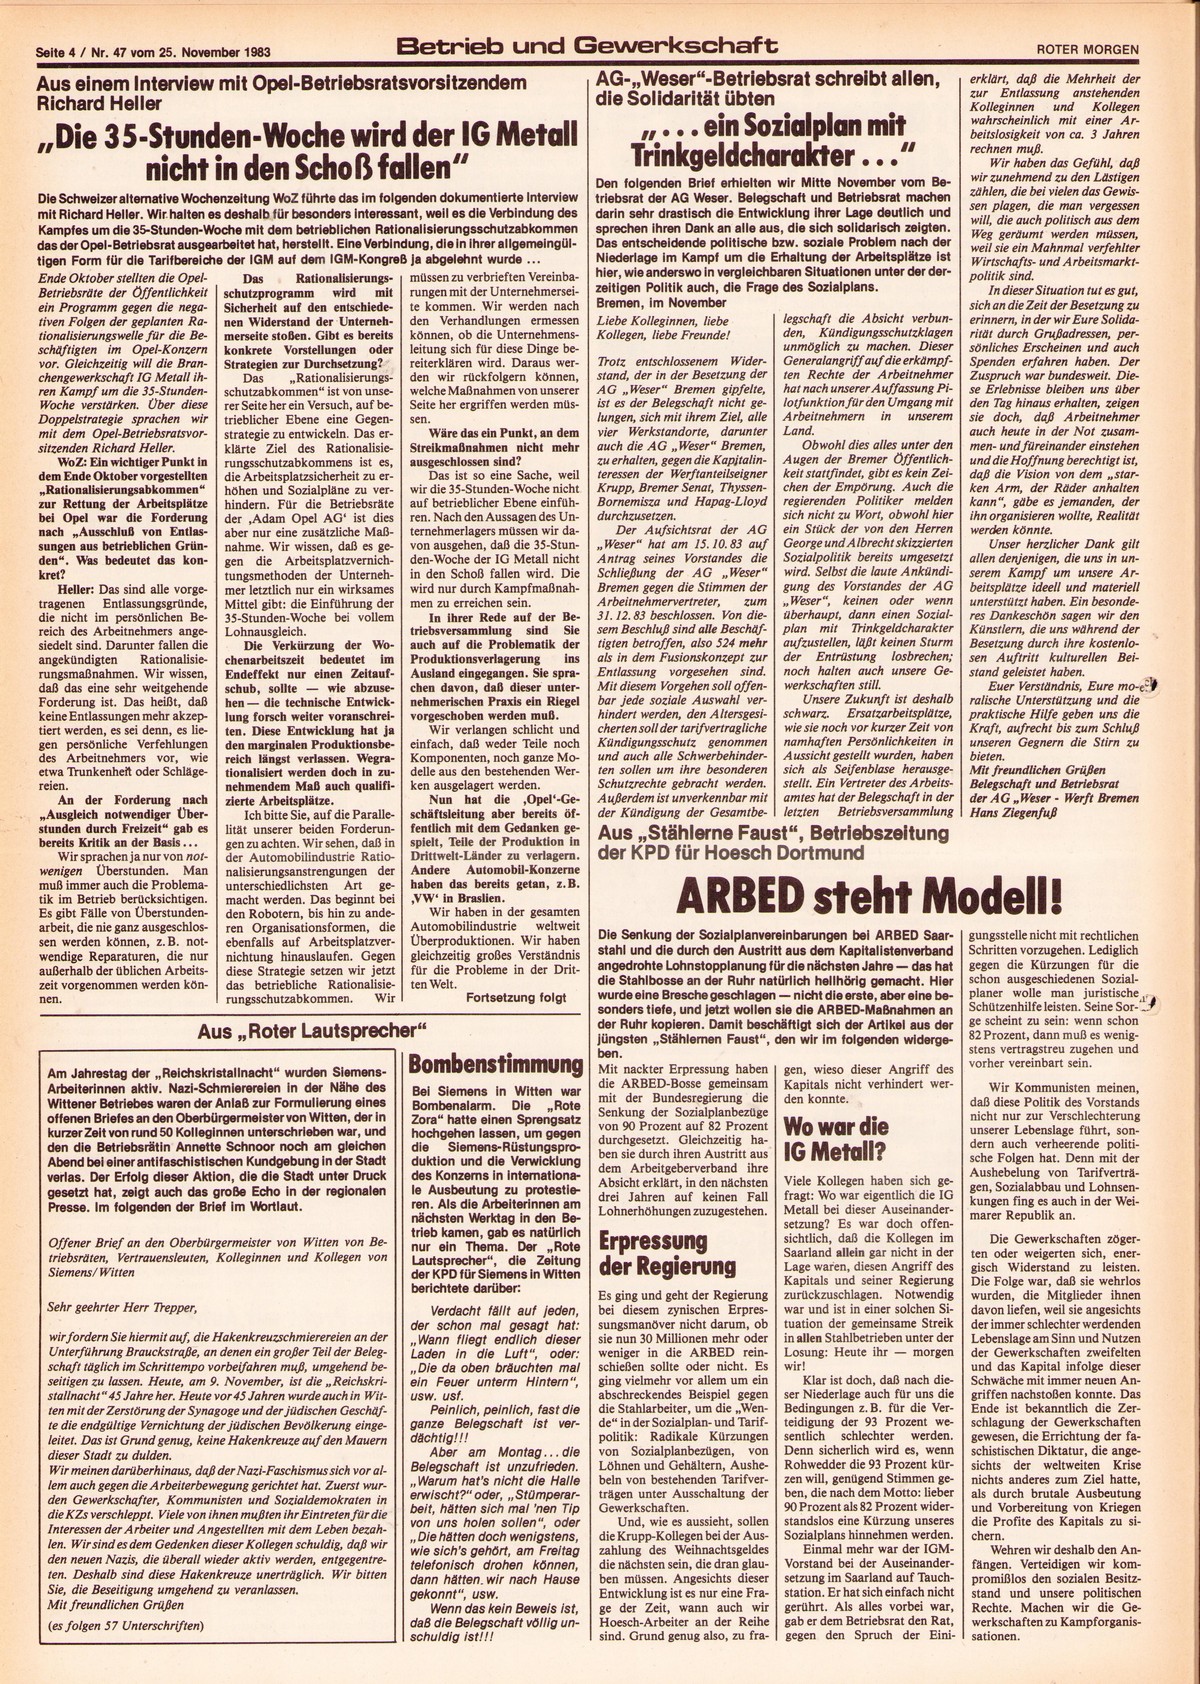 Roter Morgen, 17. Jg., 25. November 1983, Nr. 47, Seite 4